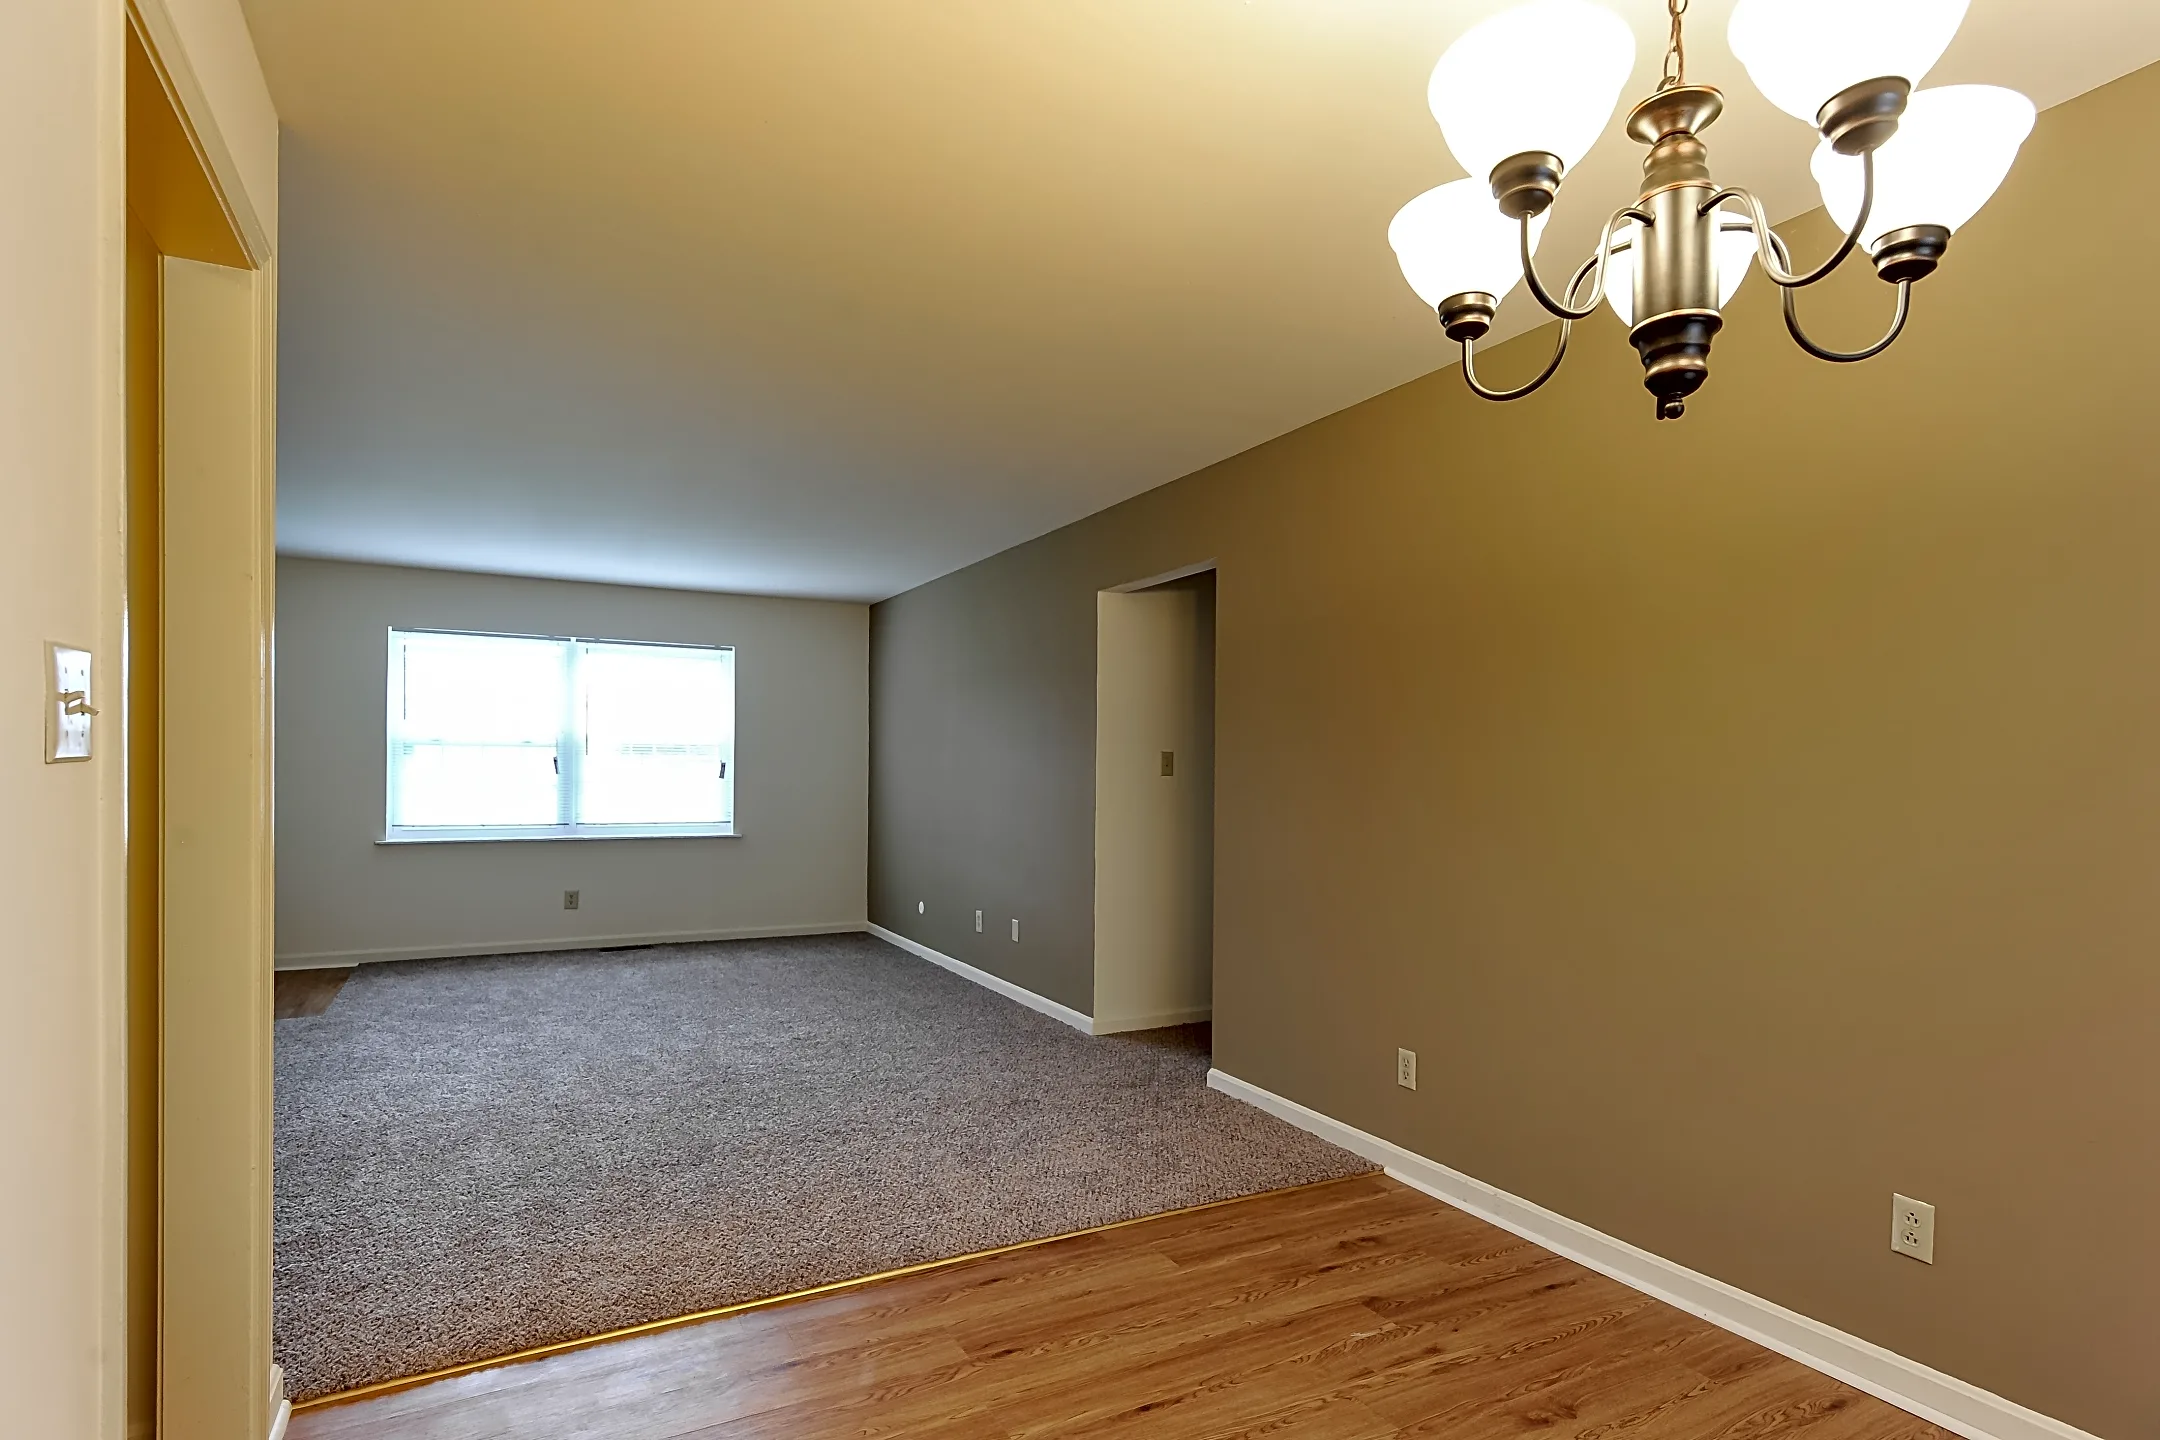 Bedroom - Apartment Village - Evansville, IN